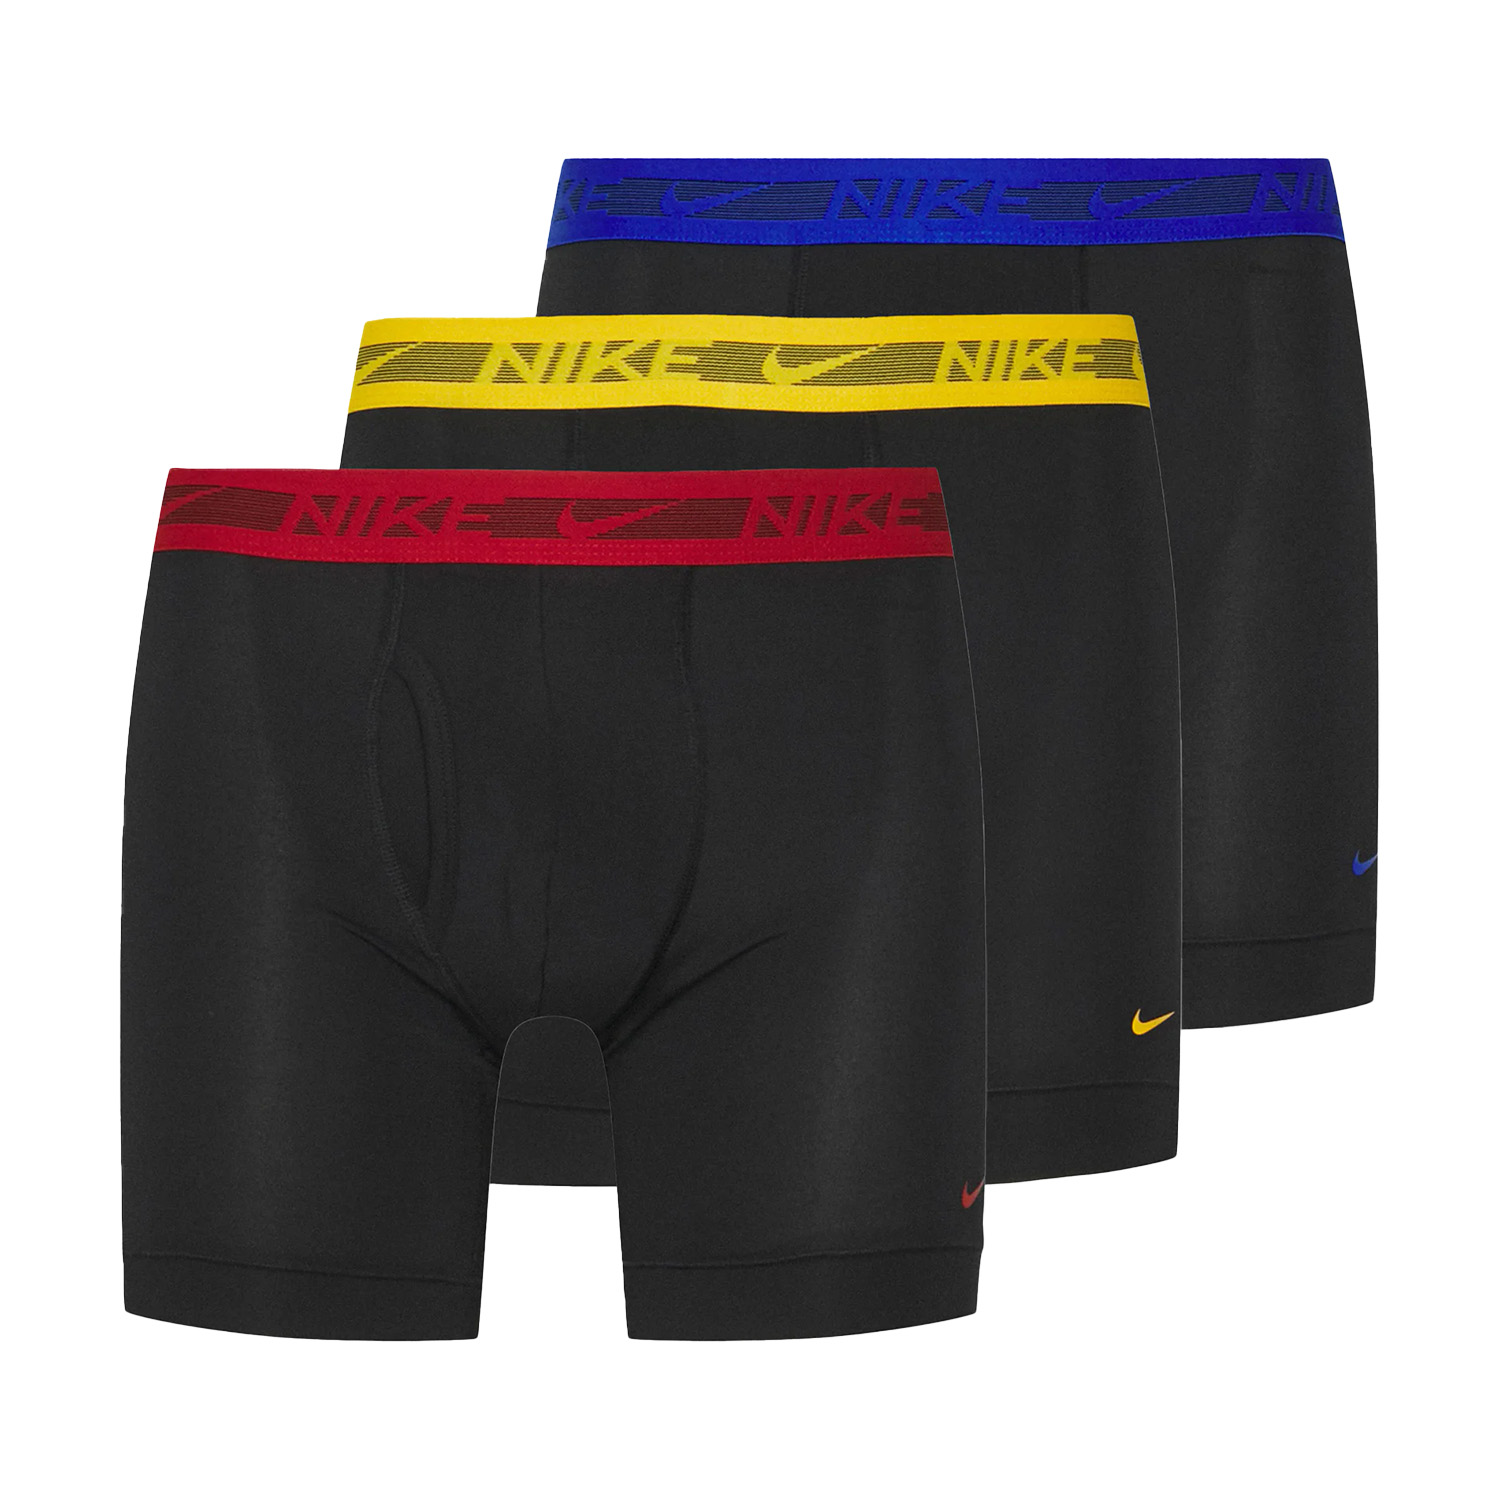 Nike Dri-FIT Ultra Stretch x 3 Men's Underwear Boxer - Cinnabar